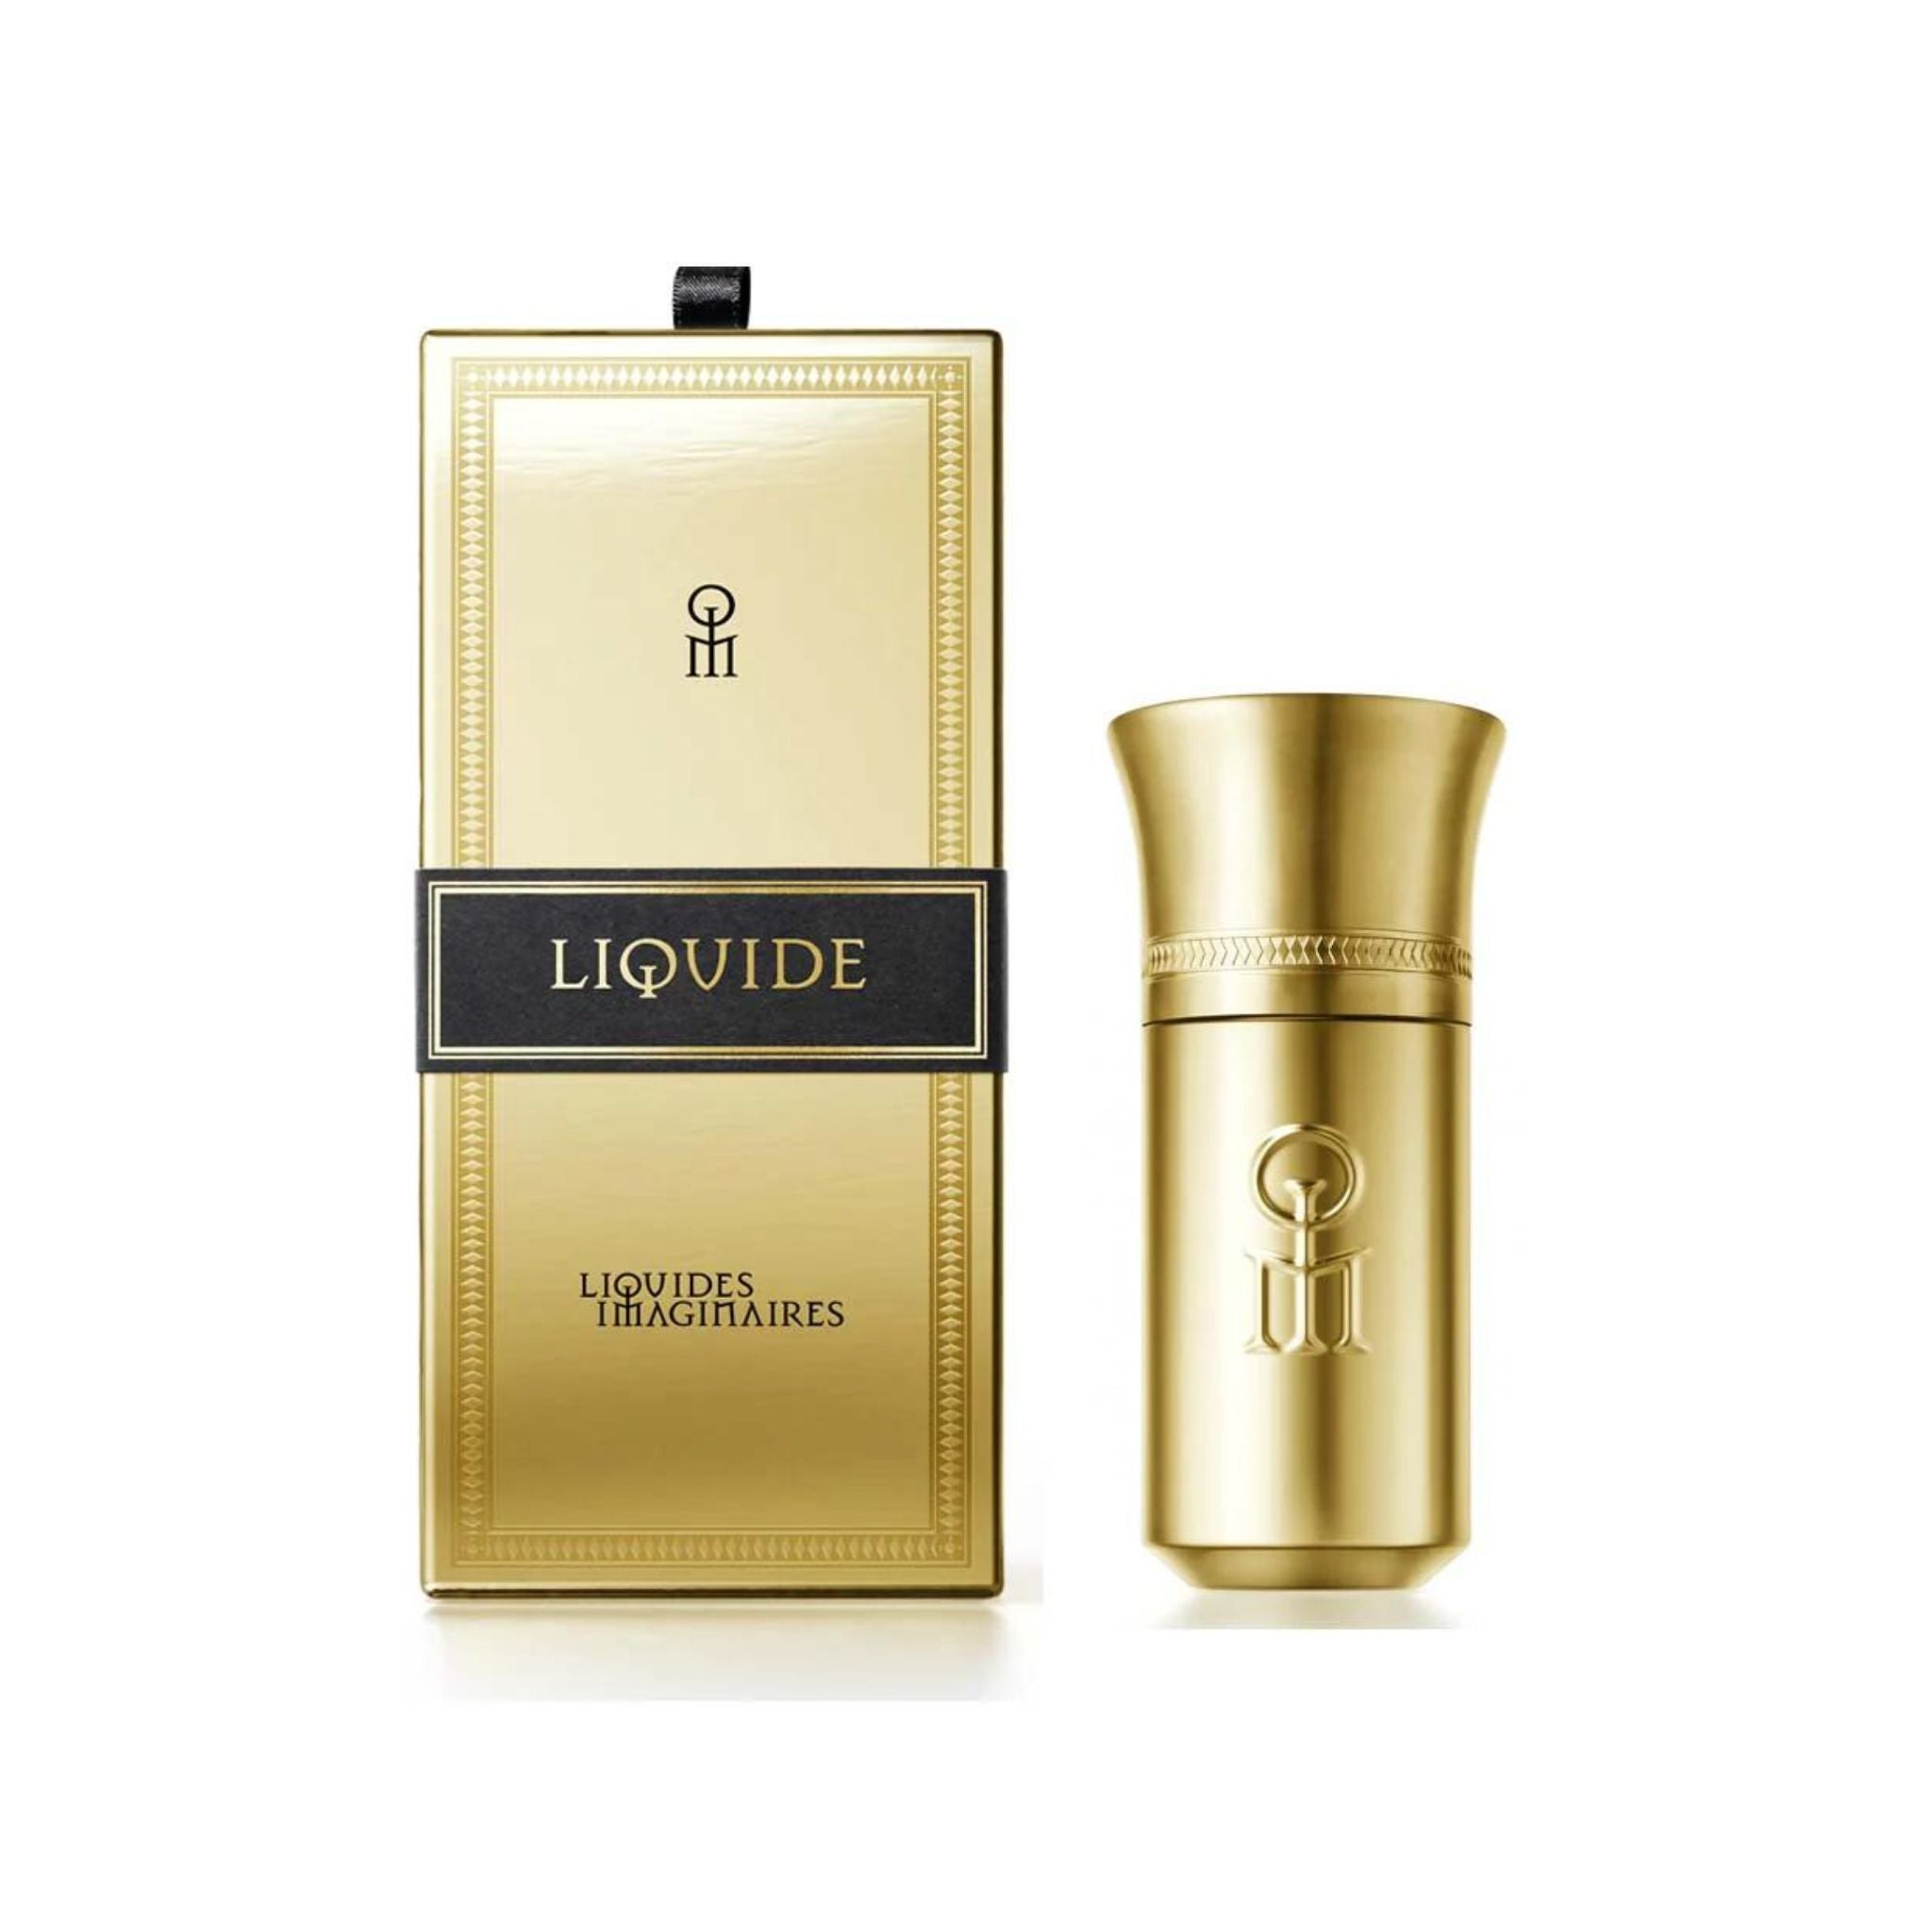 Liquides Imaginaies Liquide Gold Packaging